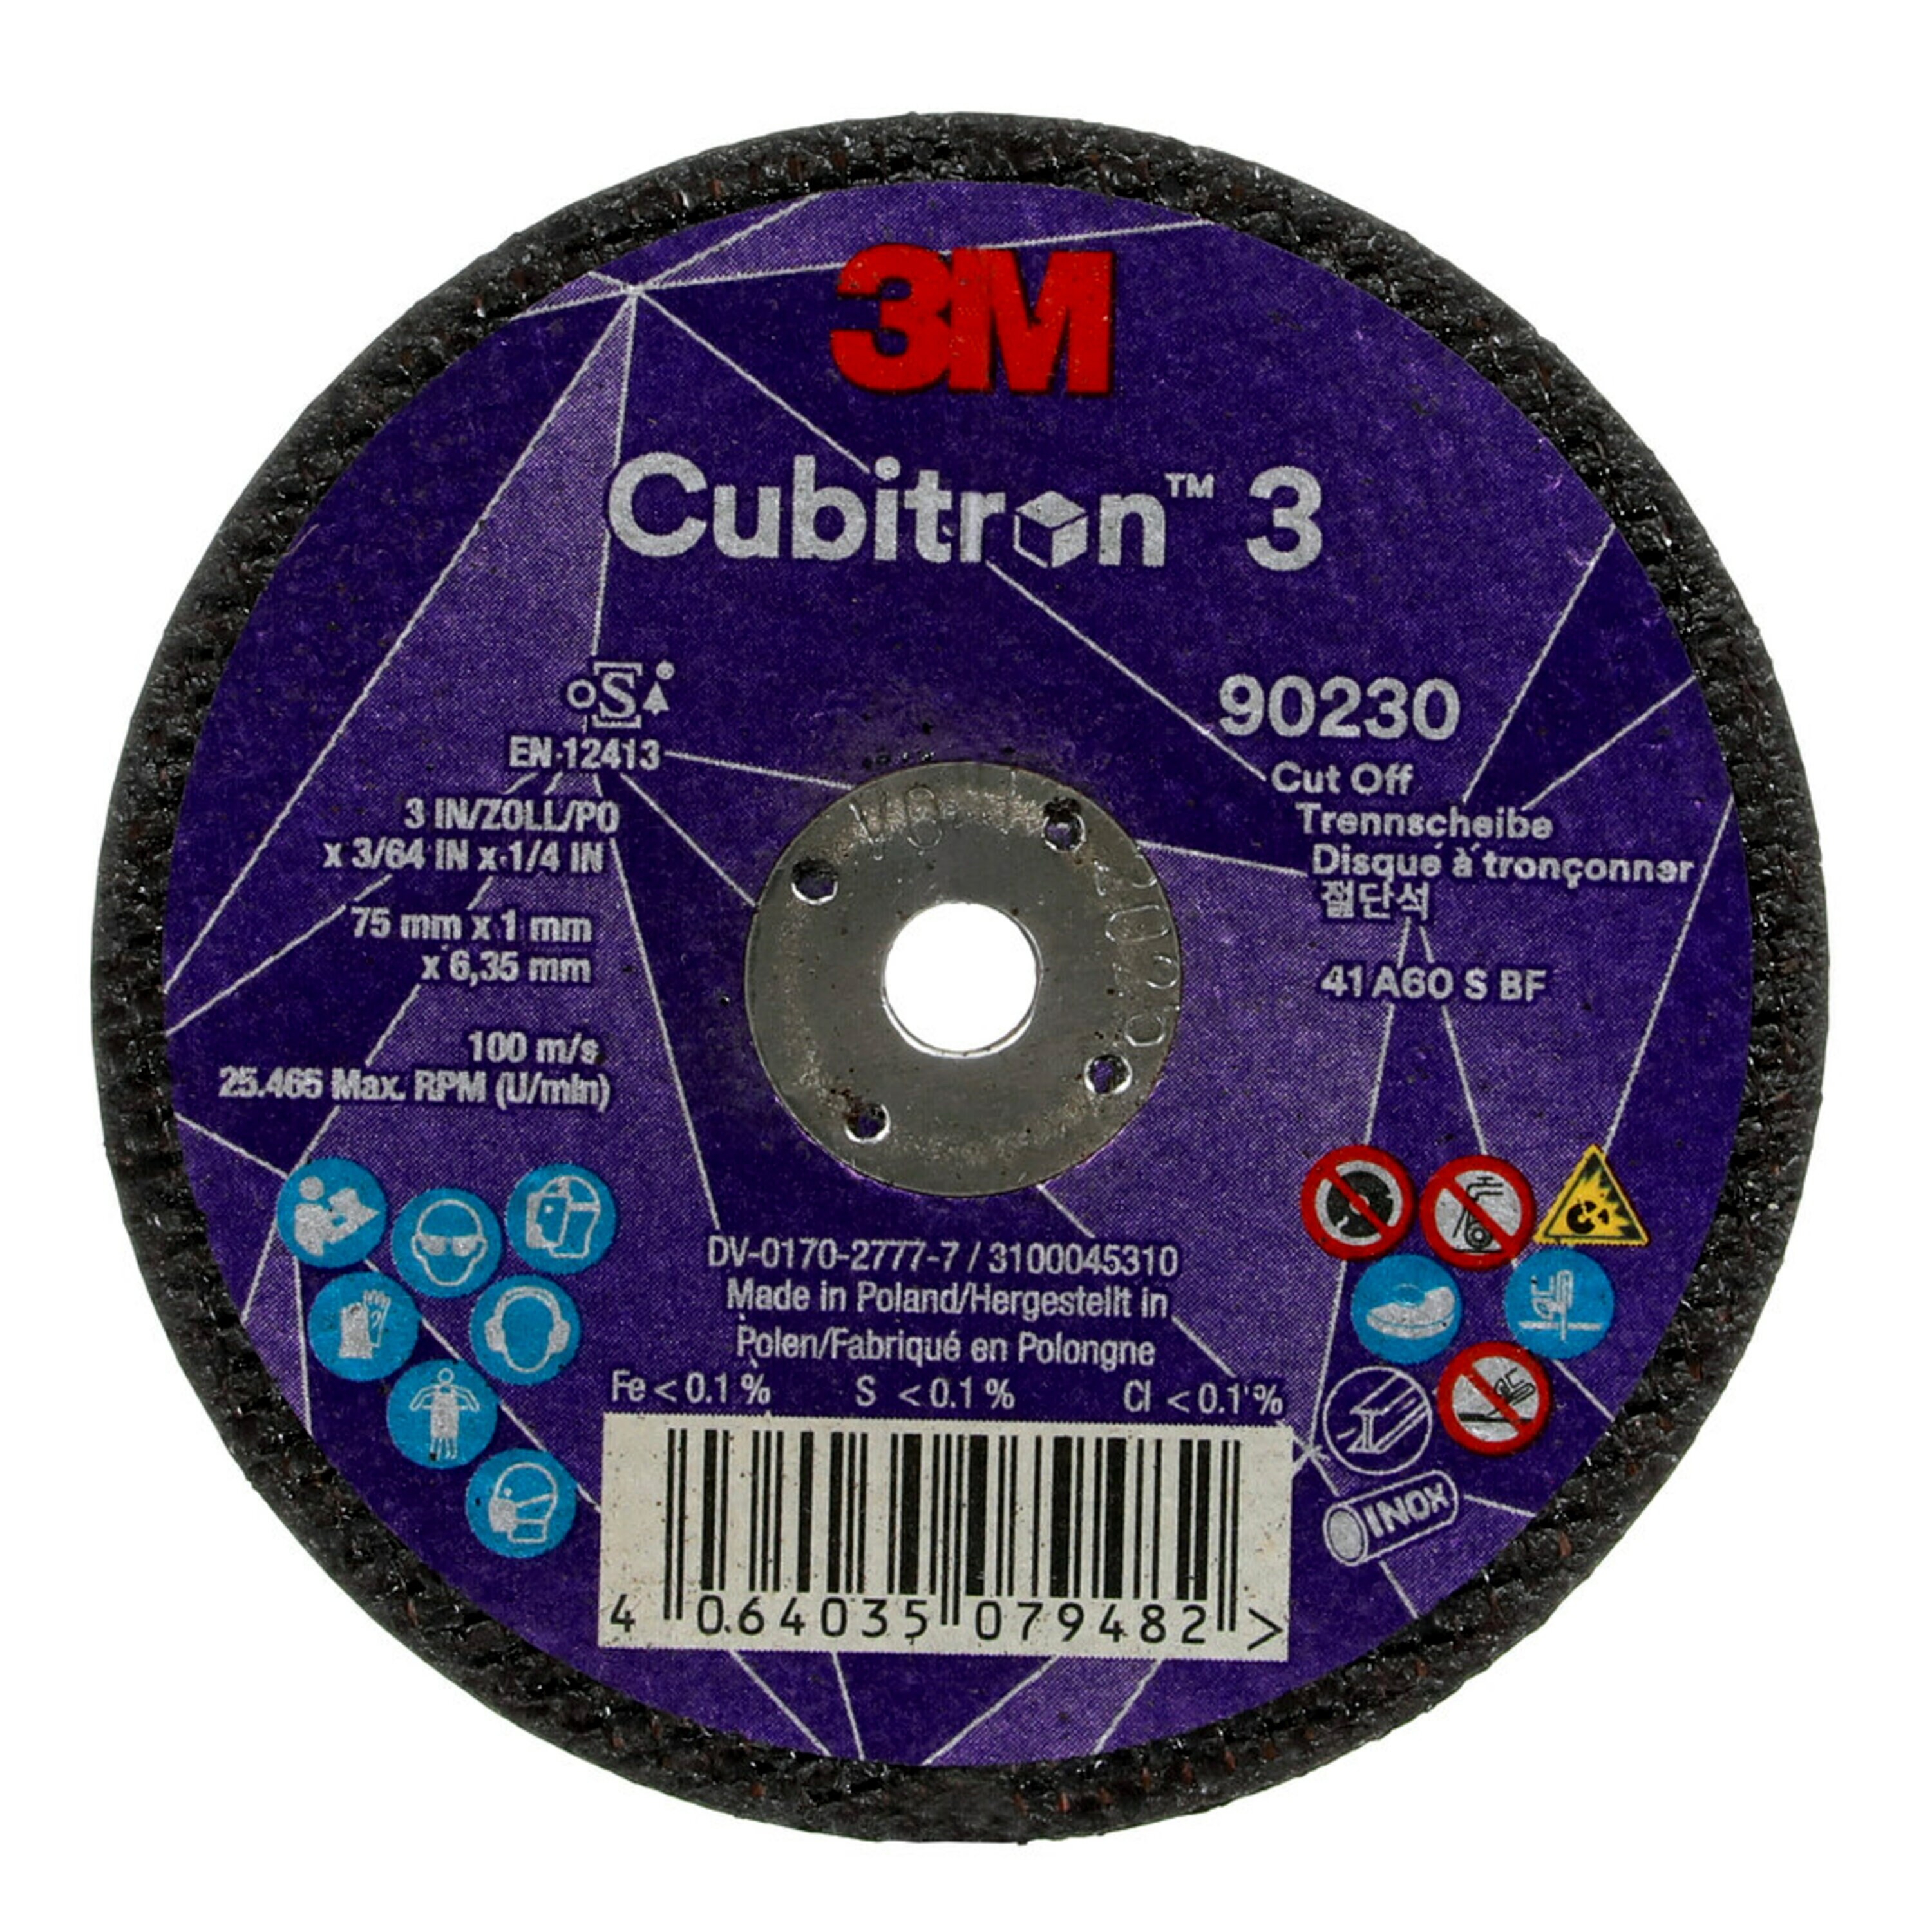 3M Cubitron 3 cut-off wheel, 75 mm, 1 mm, 6.35 mm, 60 , type 41 #90230